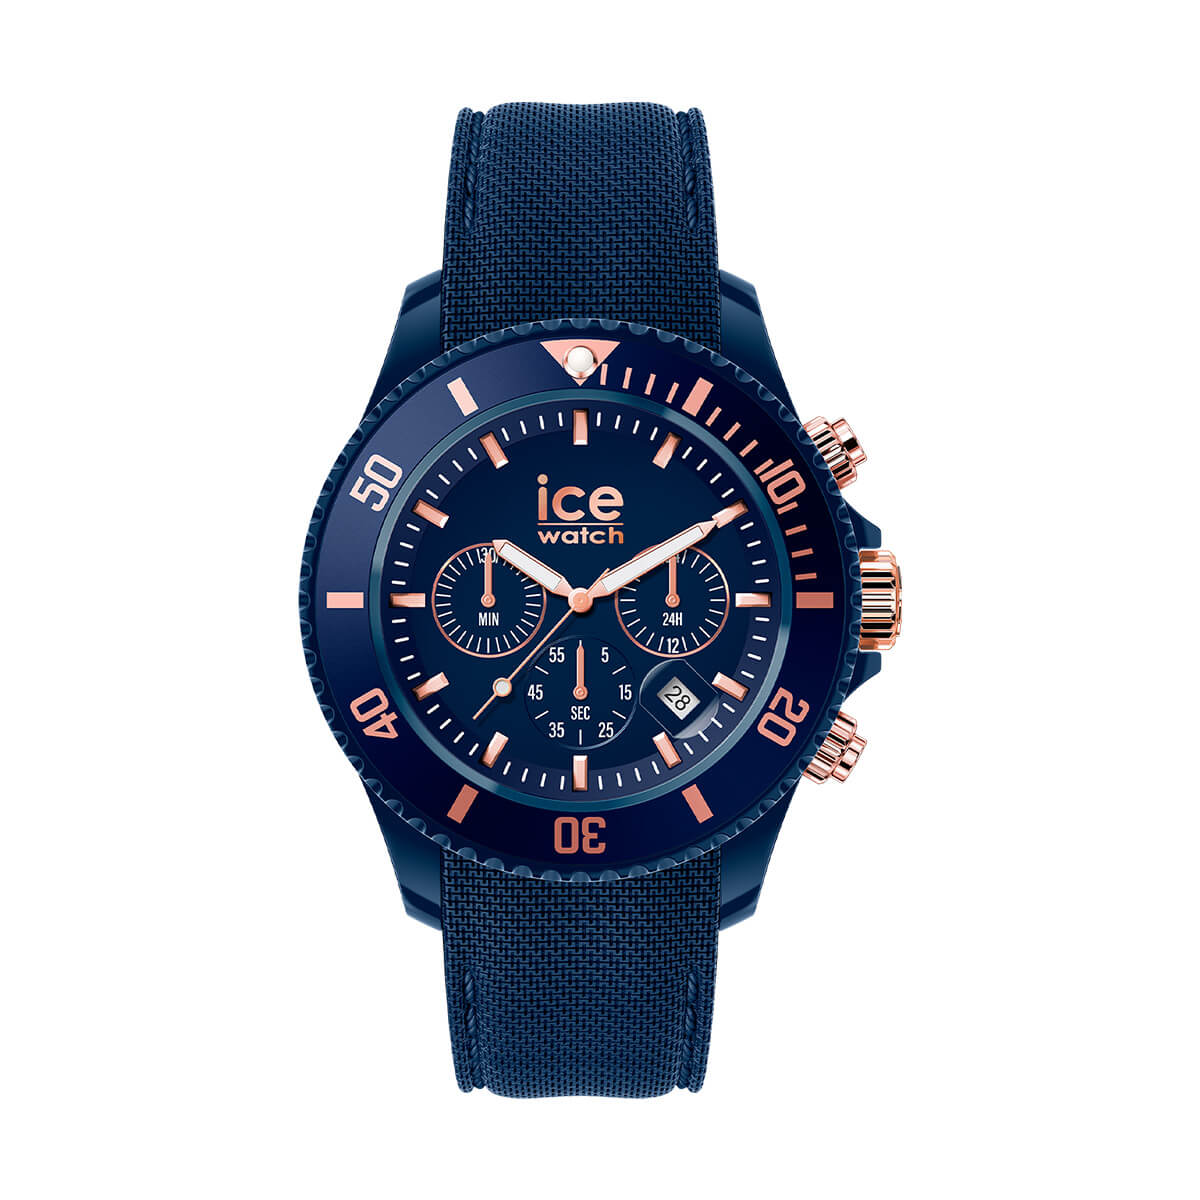 Ice watch 腕時計 ヨーロッパ限定モデル - 腕時計、アクセサリー